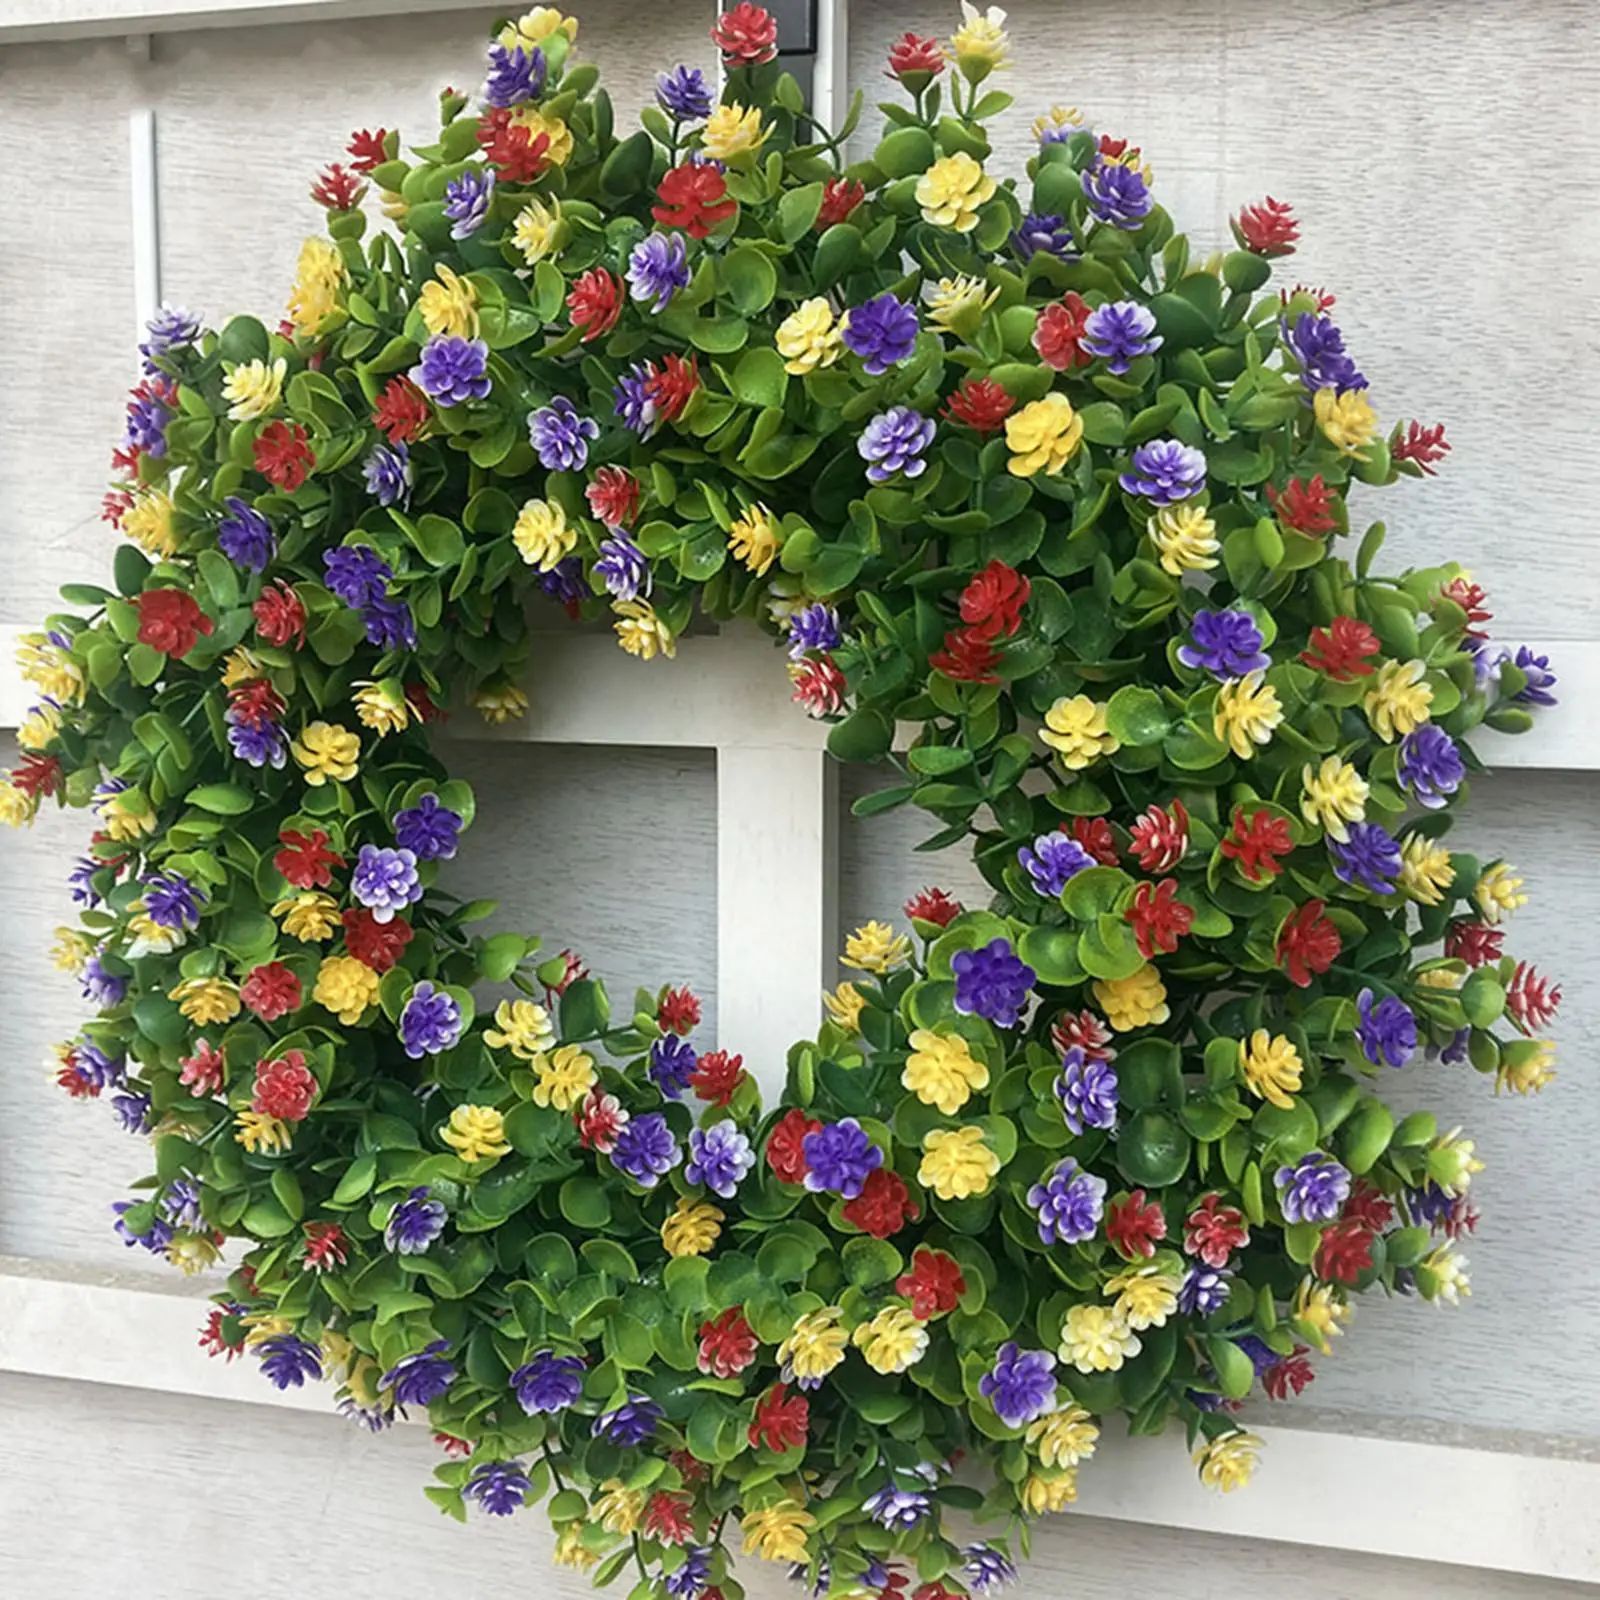 45cm Artificial Wreath Door Wreath Rose Spring Wreath Round Wreath for The Front Door Home Flower Wall Garland Decor